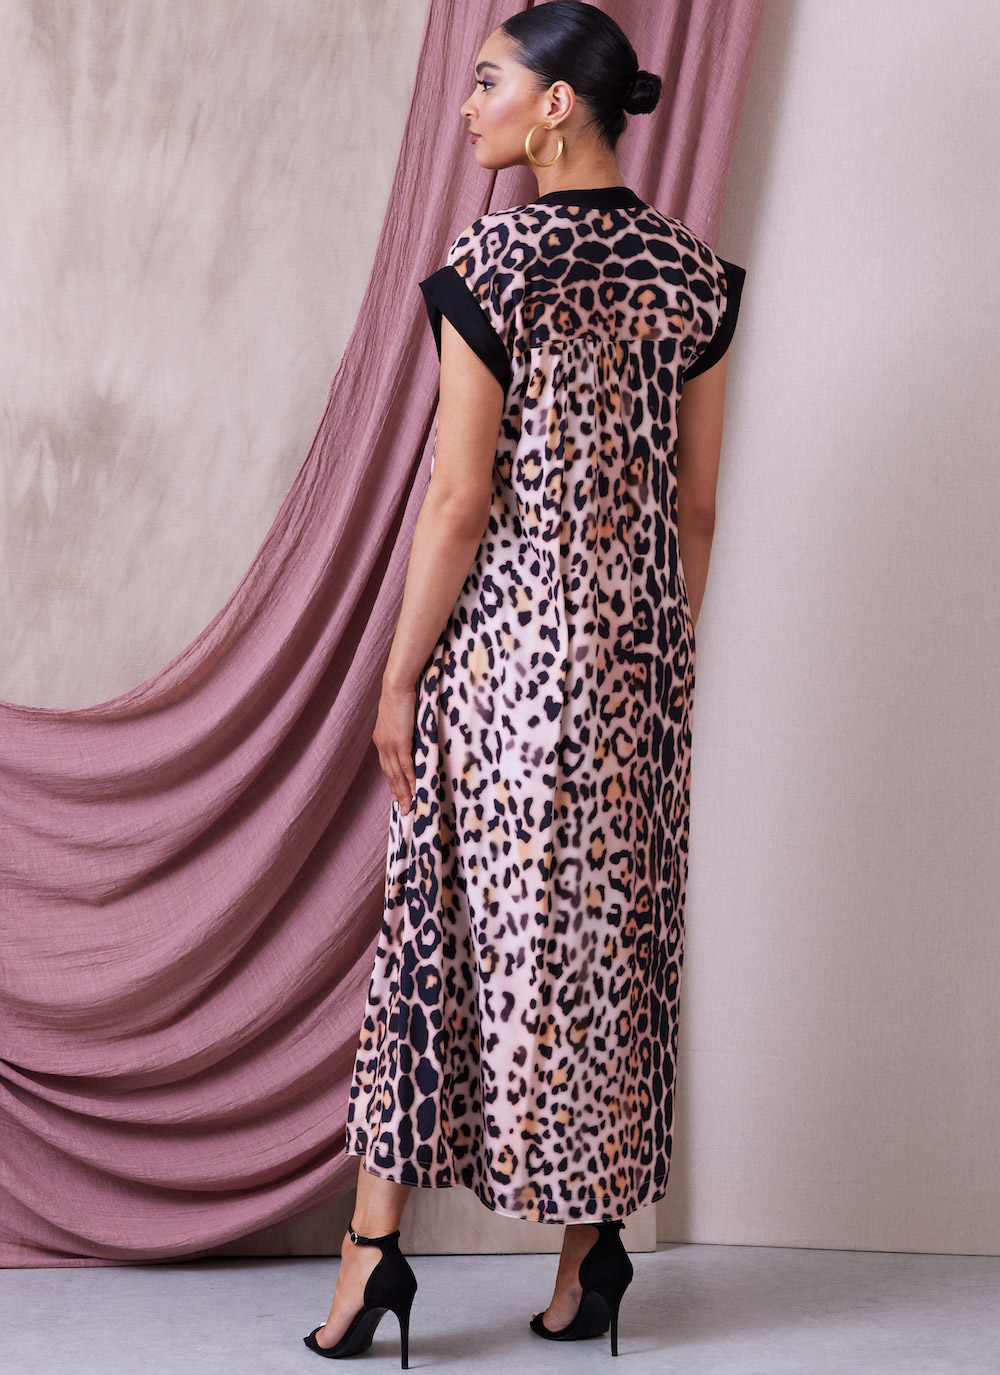 Vogue® Patterns Papierschnittmuster Sandra Betzina Kleid & Bluse V1937 Größe A